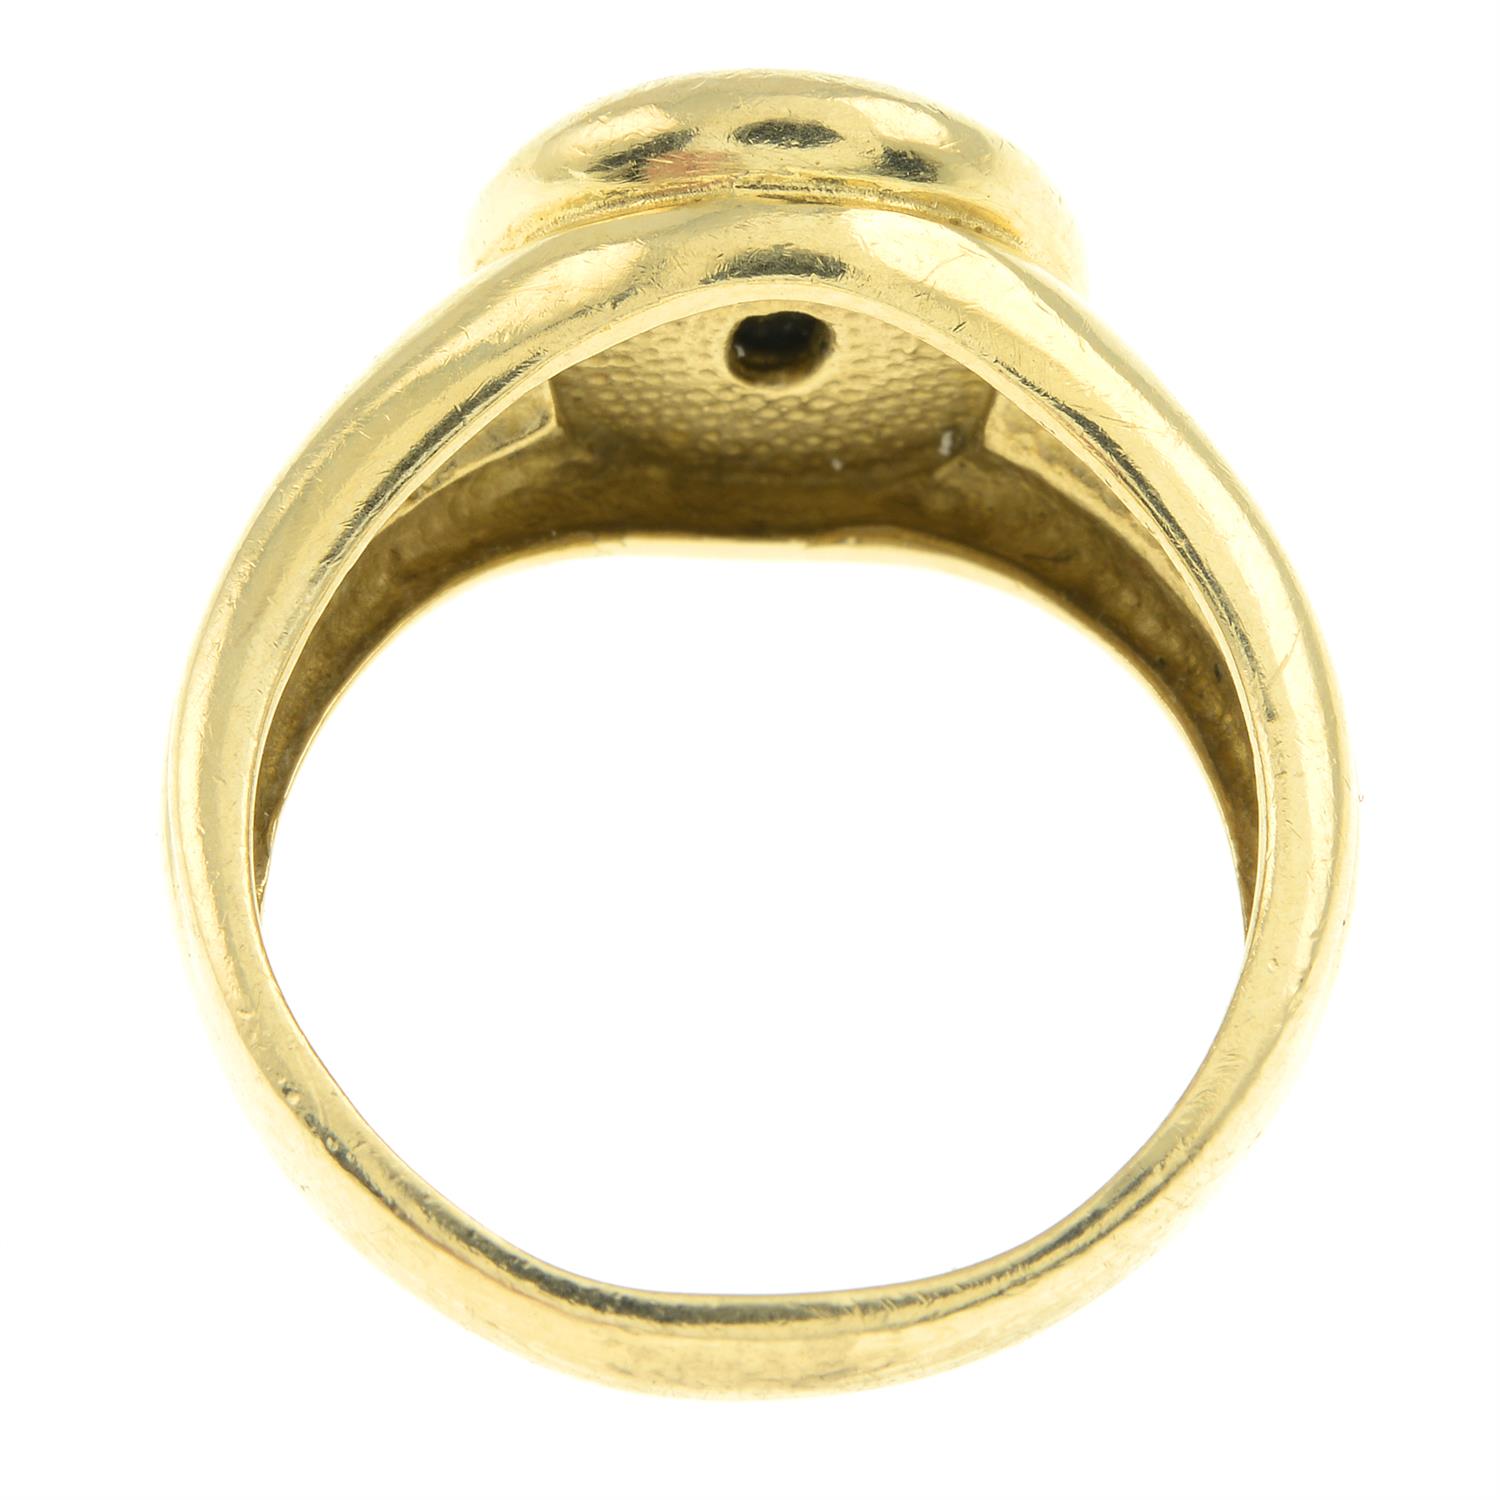 14ct gold foil-backed paste signet ring - Image 2 of 2